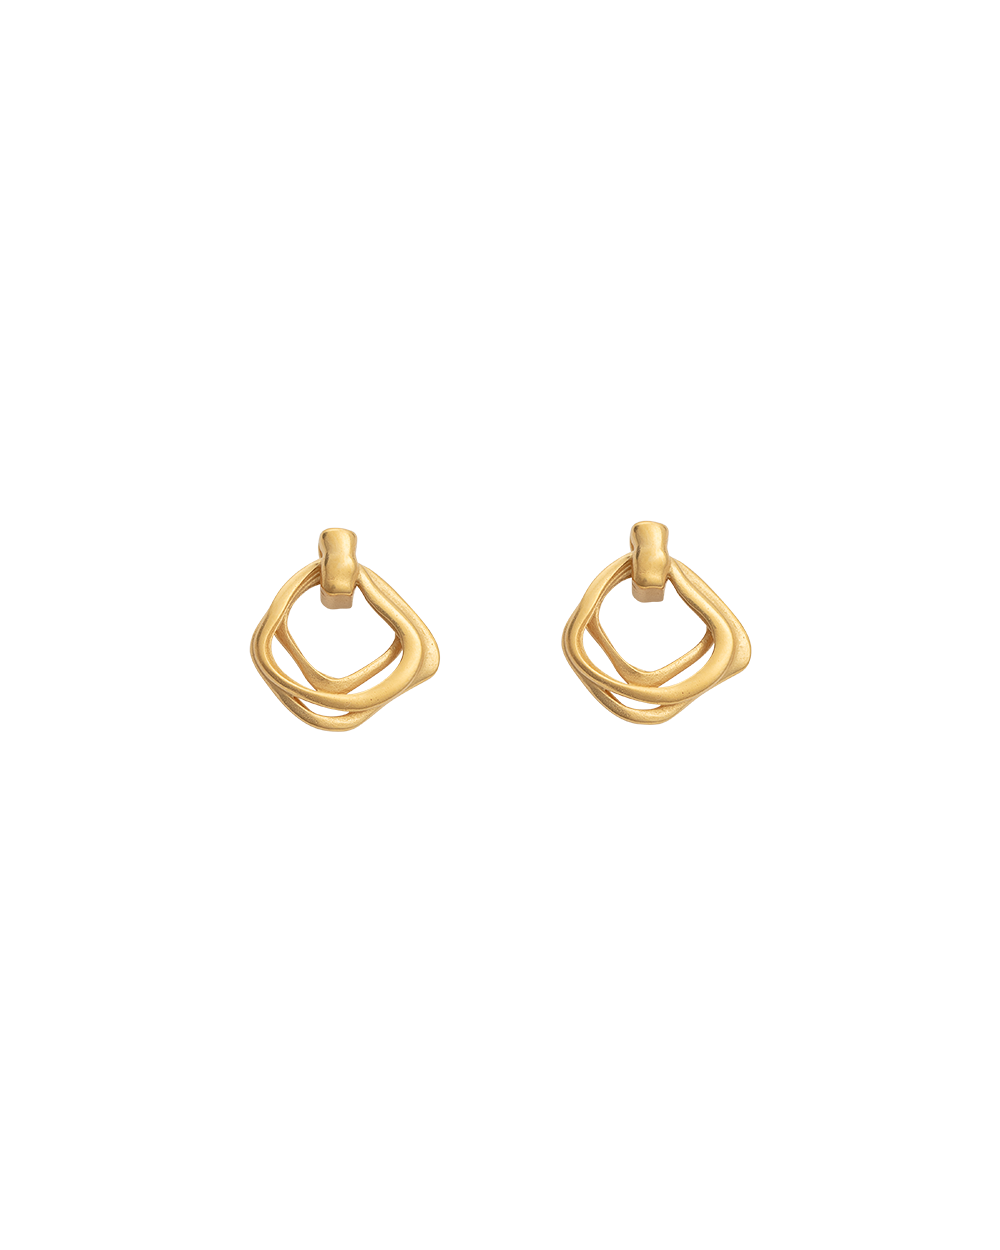 BOTANICA EARRINGS (18K GOLD PLATED) - IMAGE 1